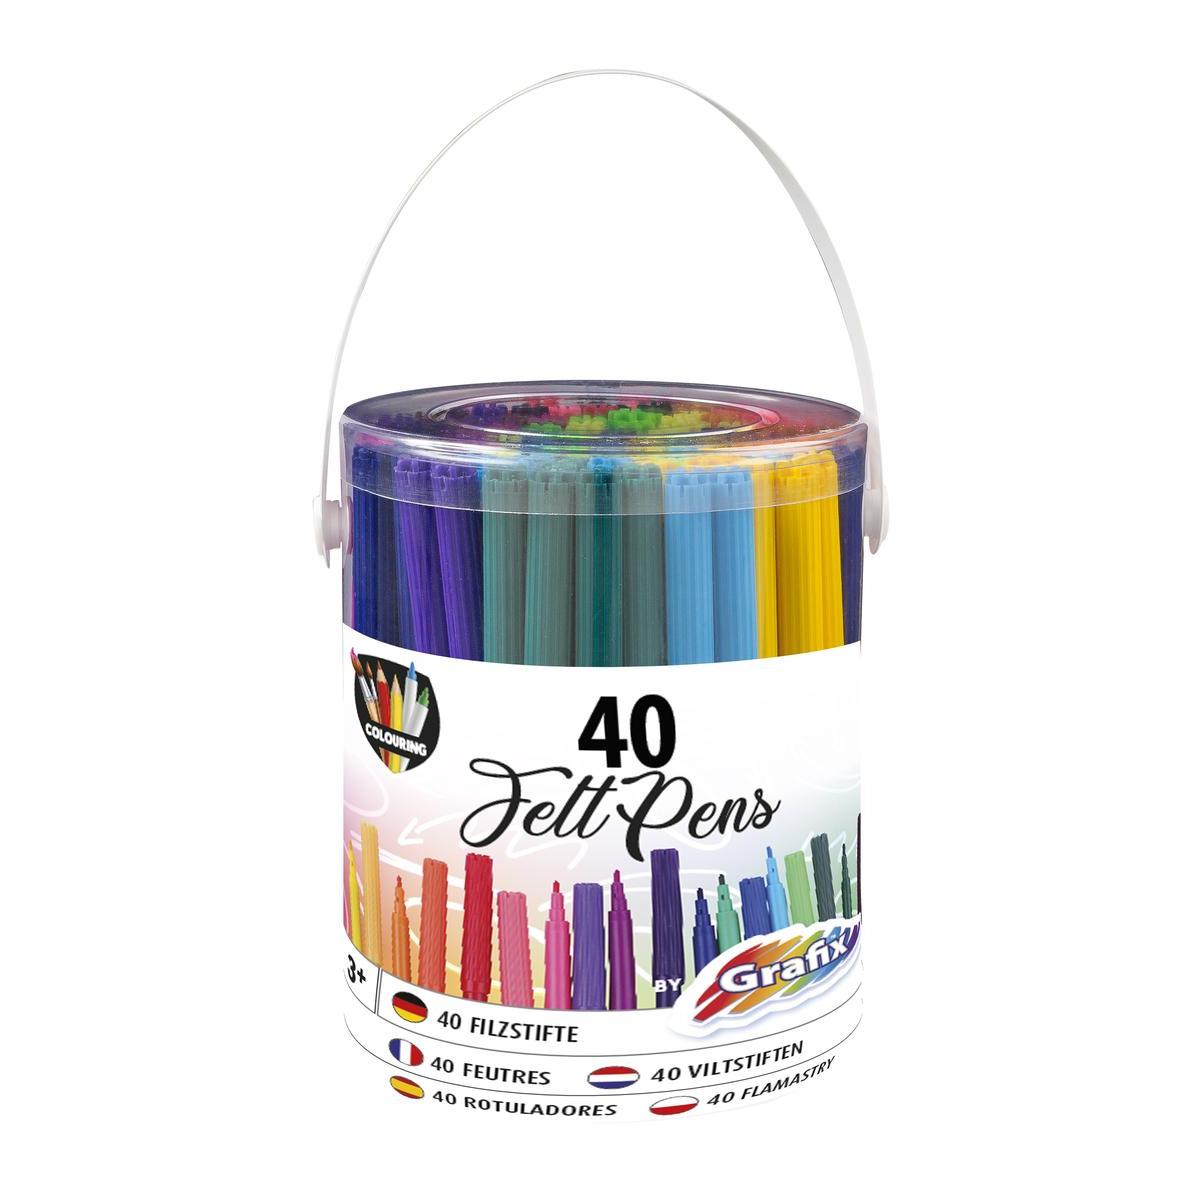 40 feutres - Multicolore